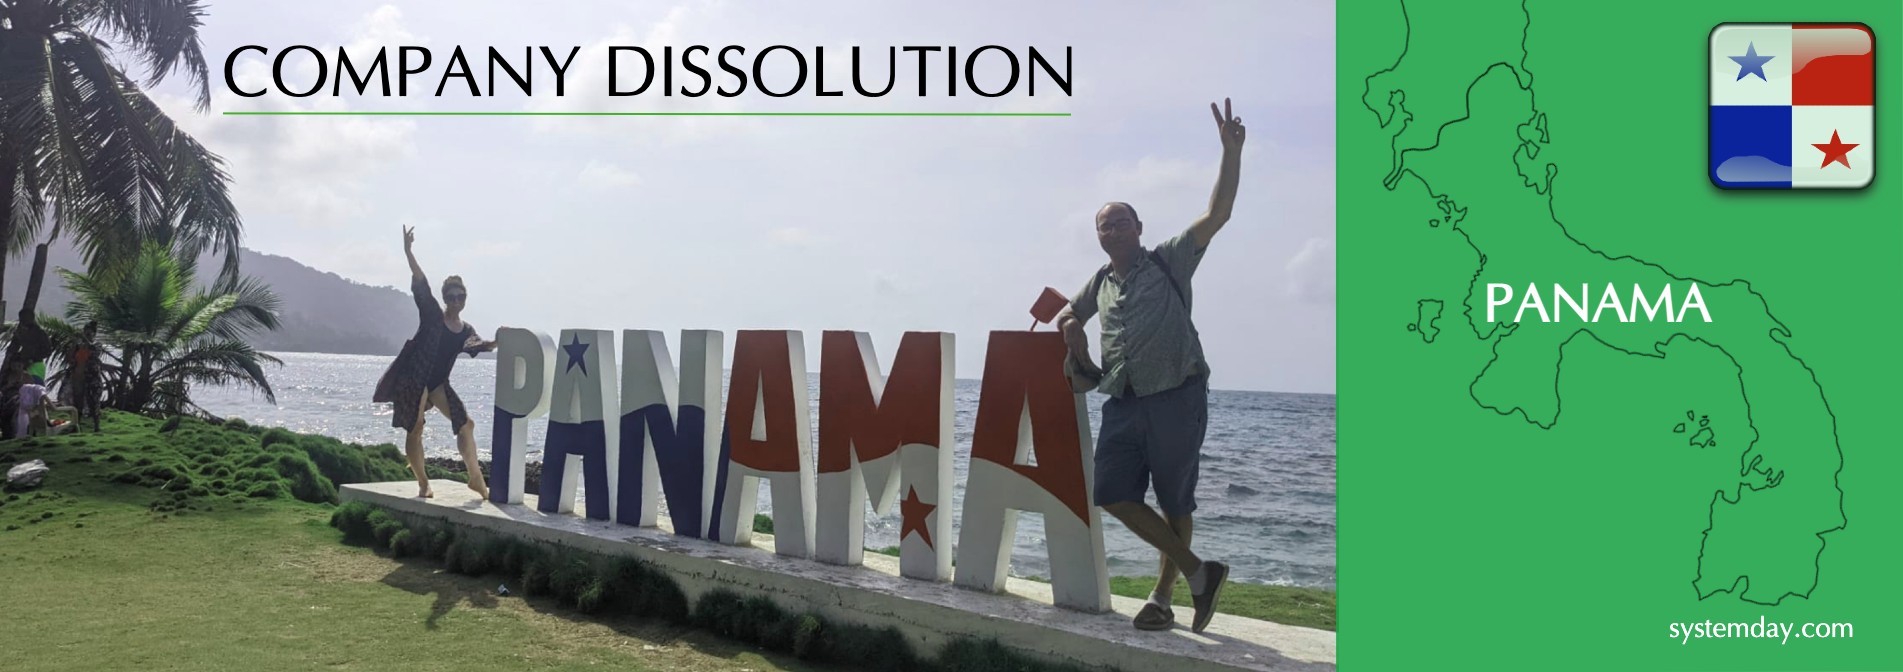 Panama Company Dissolution